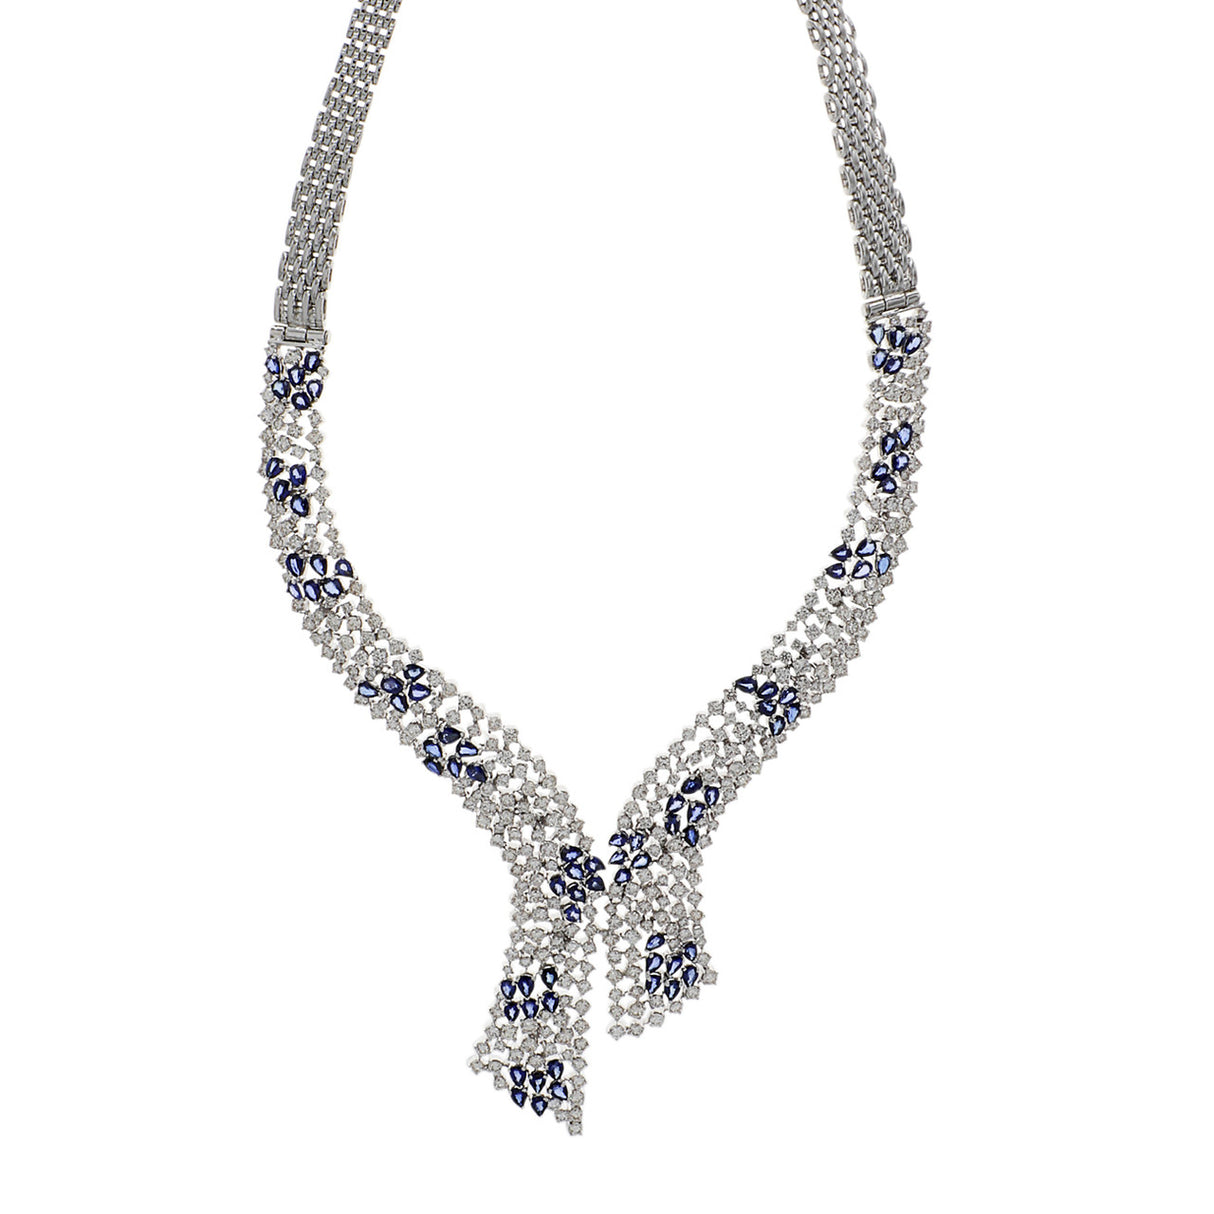 14K White Gold 14.74 Carat Sapphire & Diamond Collier Necklace